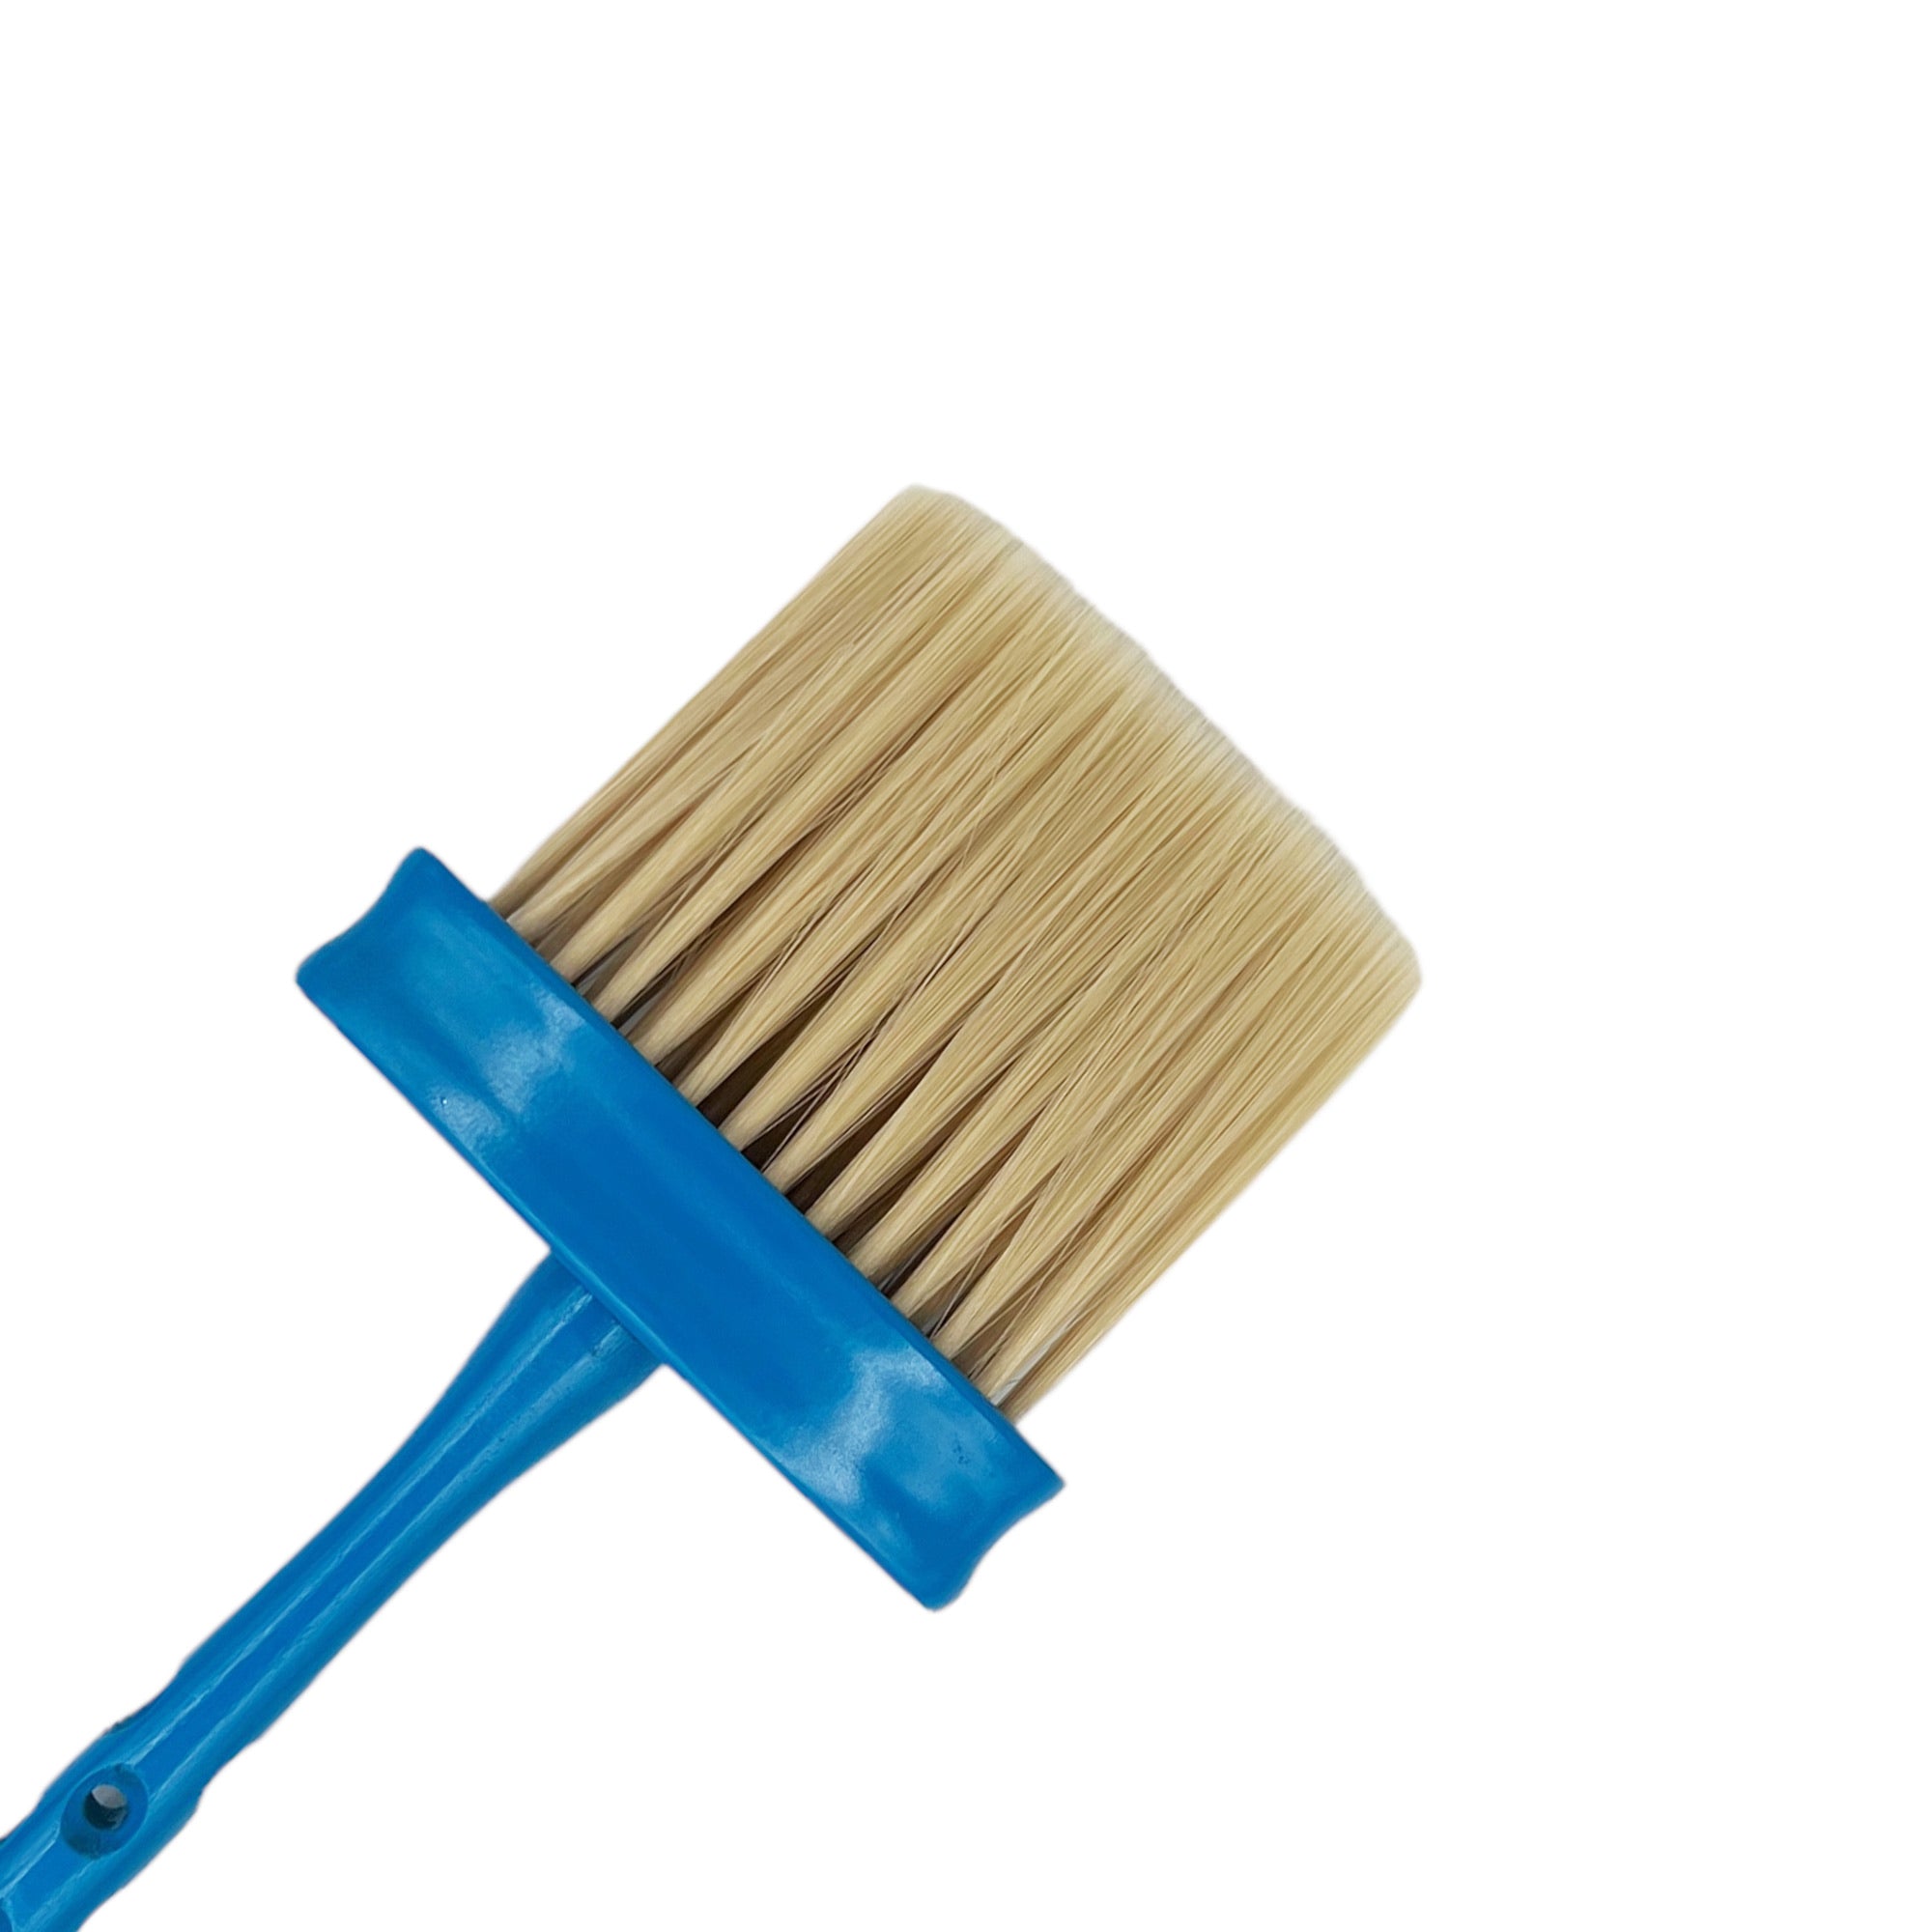 Eson - Long Handle Wooden Neck Duster Brush 25x10cm (Blue)